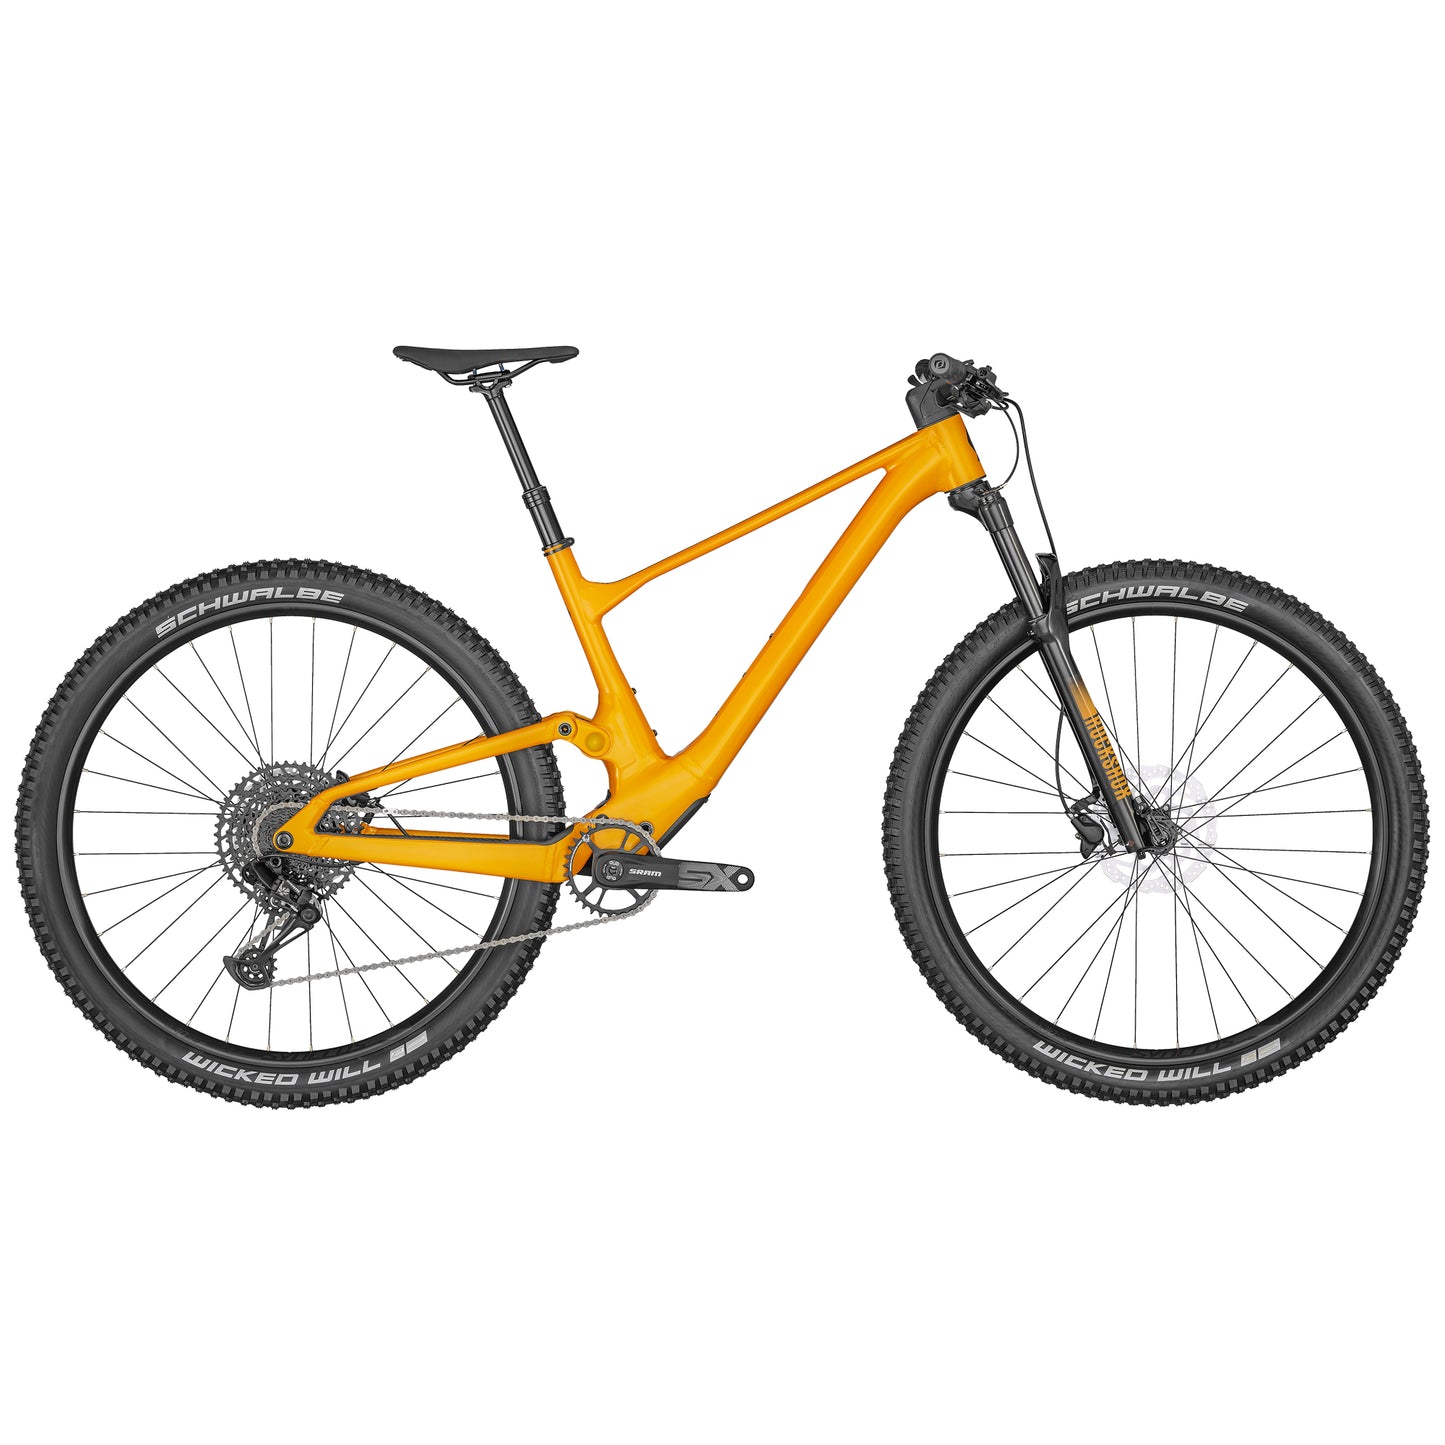 Scott Bike Spark 970 orange